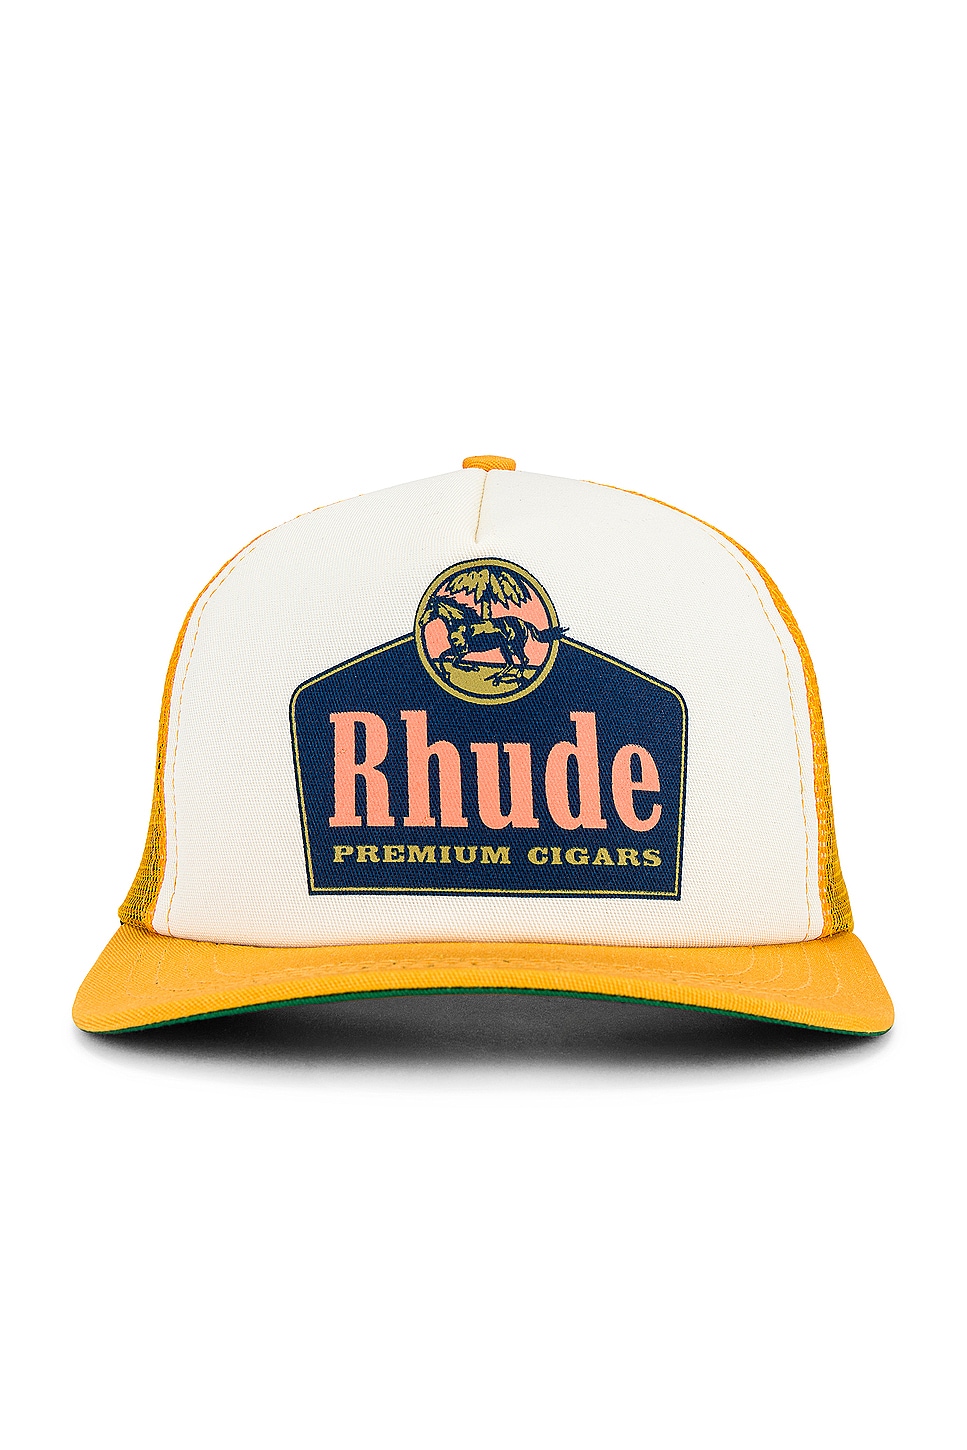 Rhude Cigars Trucker Hat in Yellow